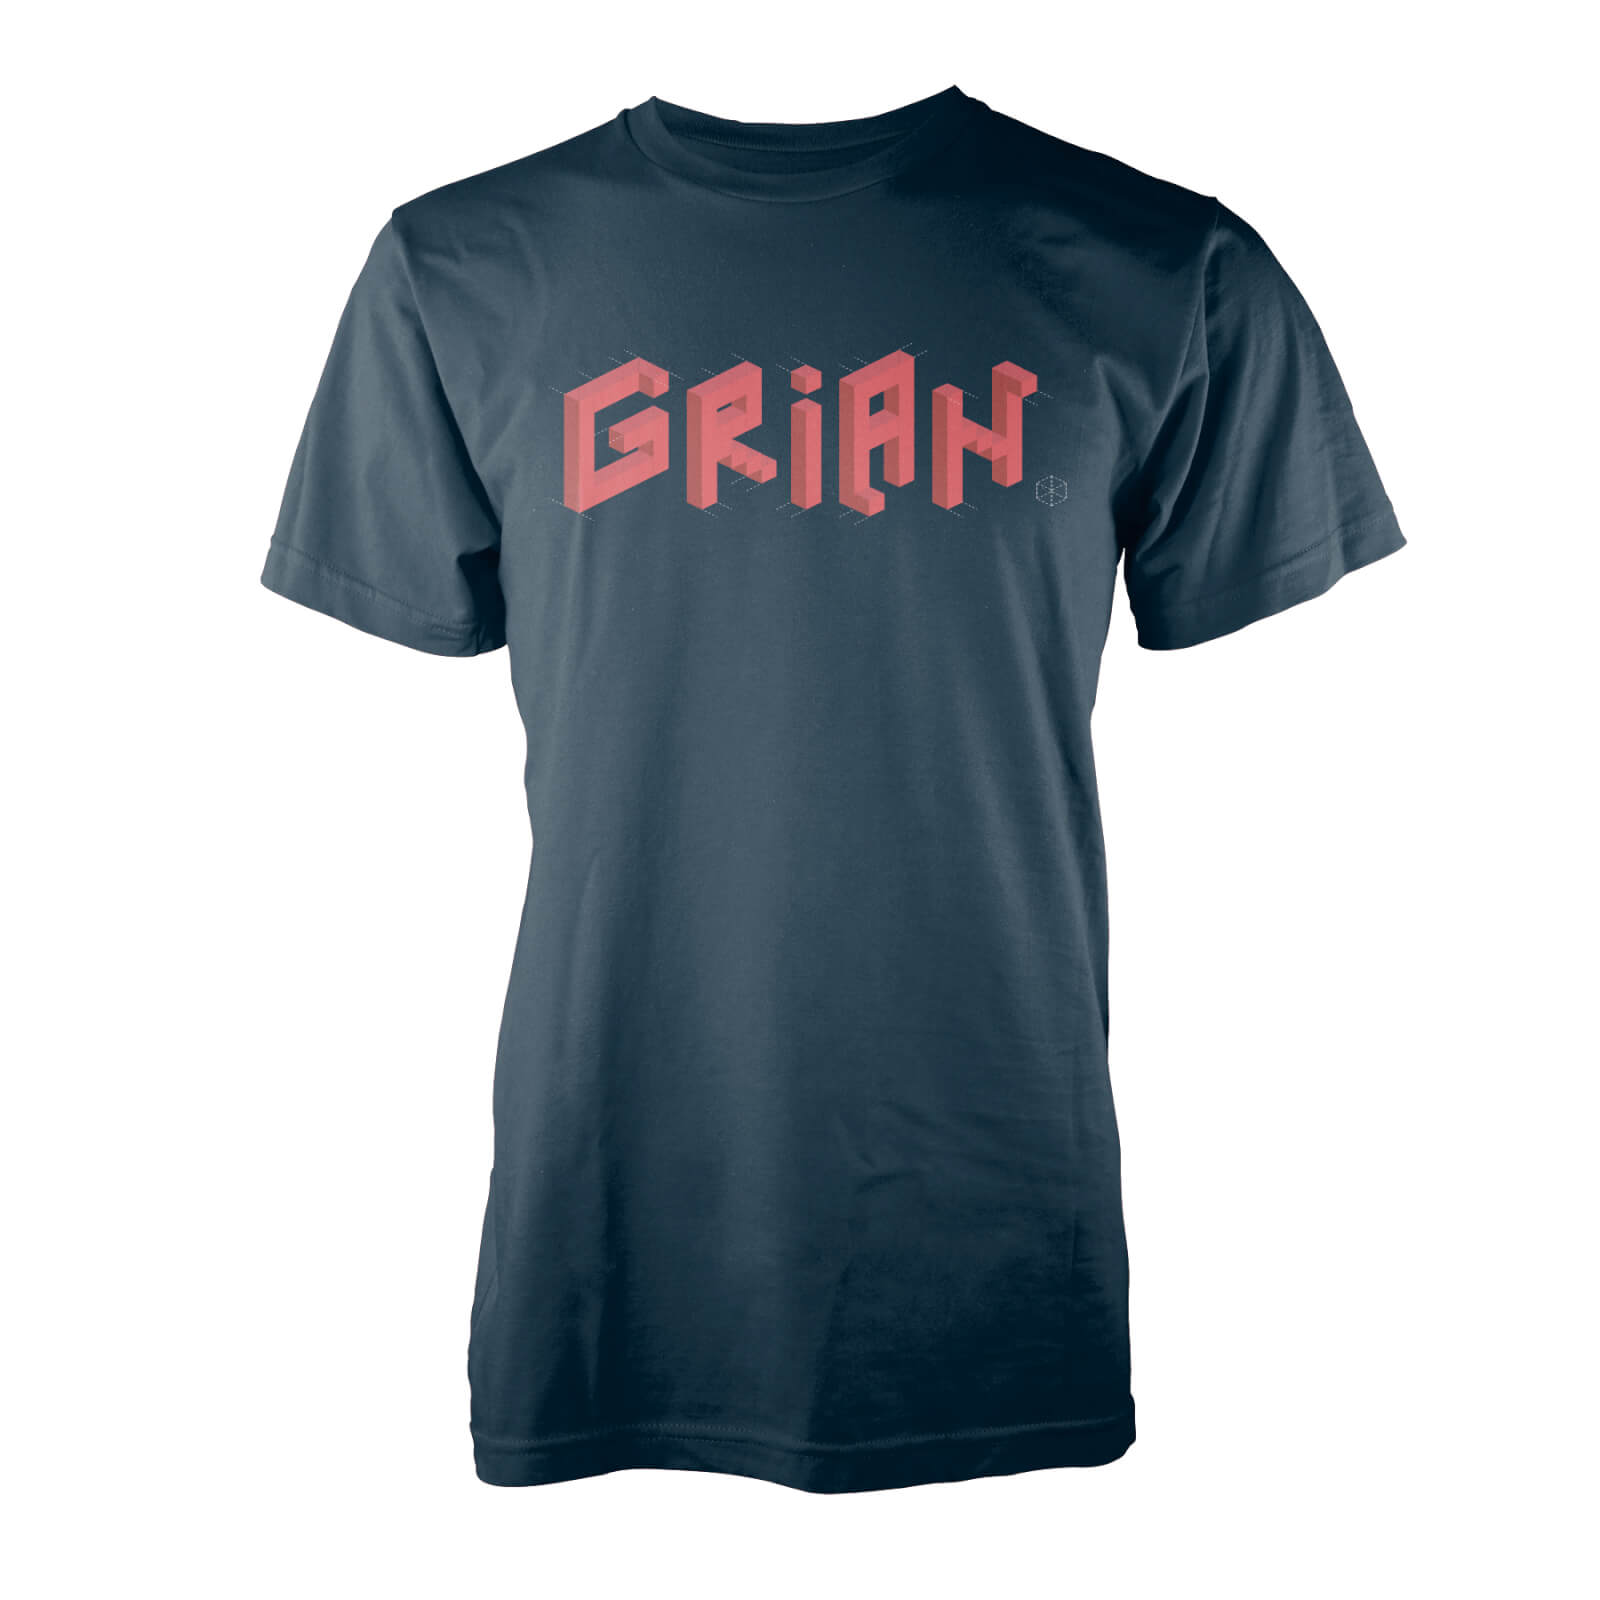 Grian - Built It! T-Shirt - Youth L